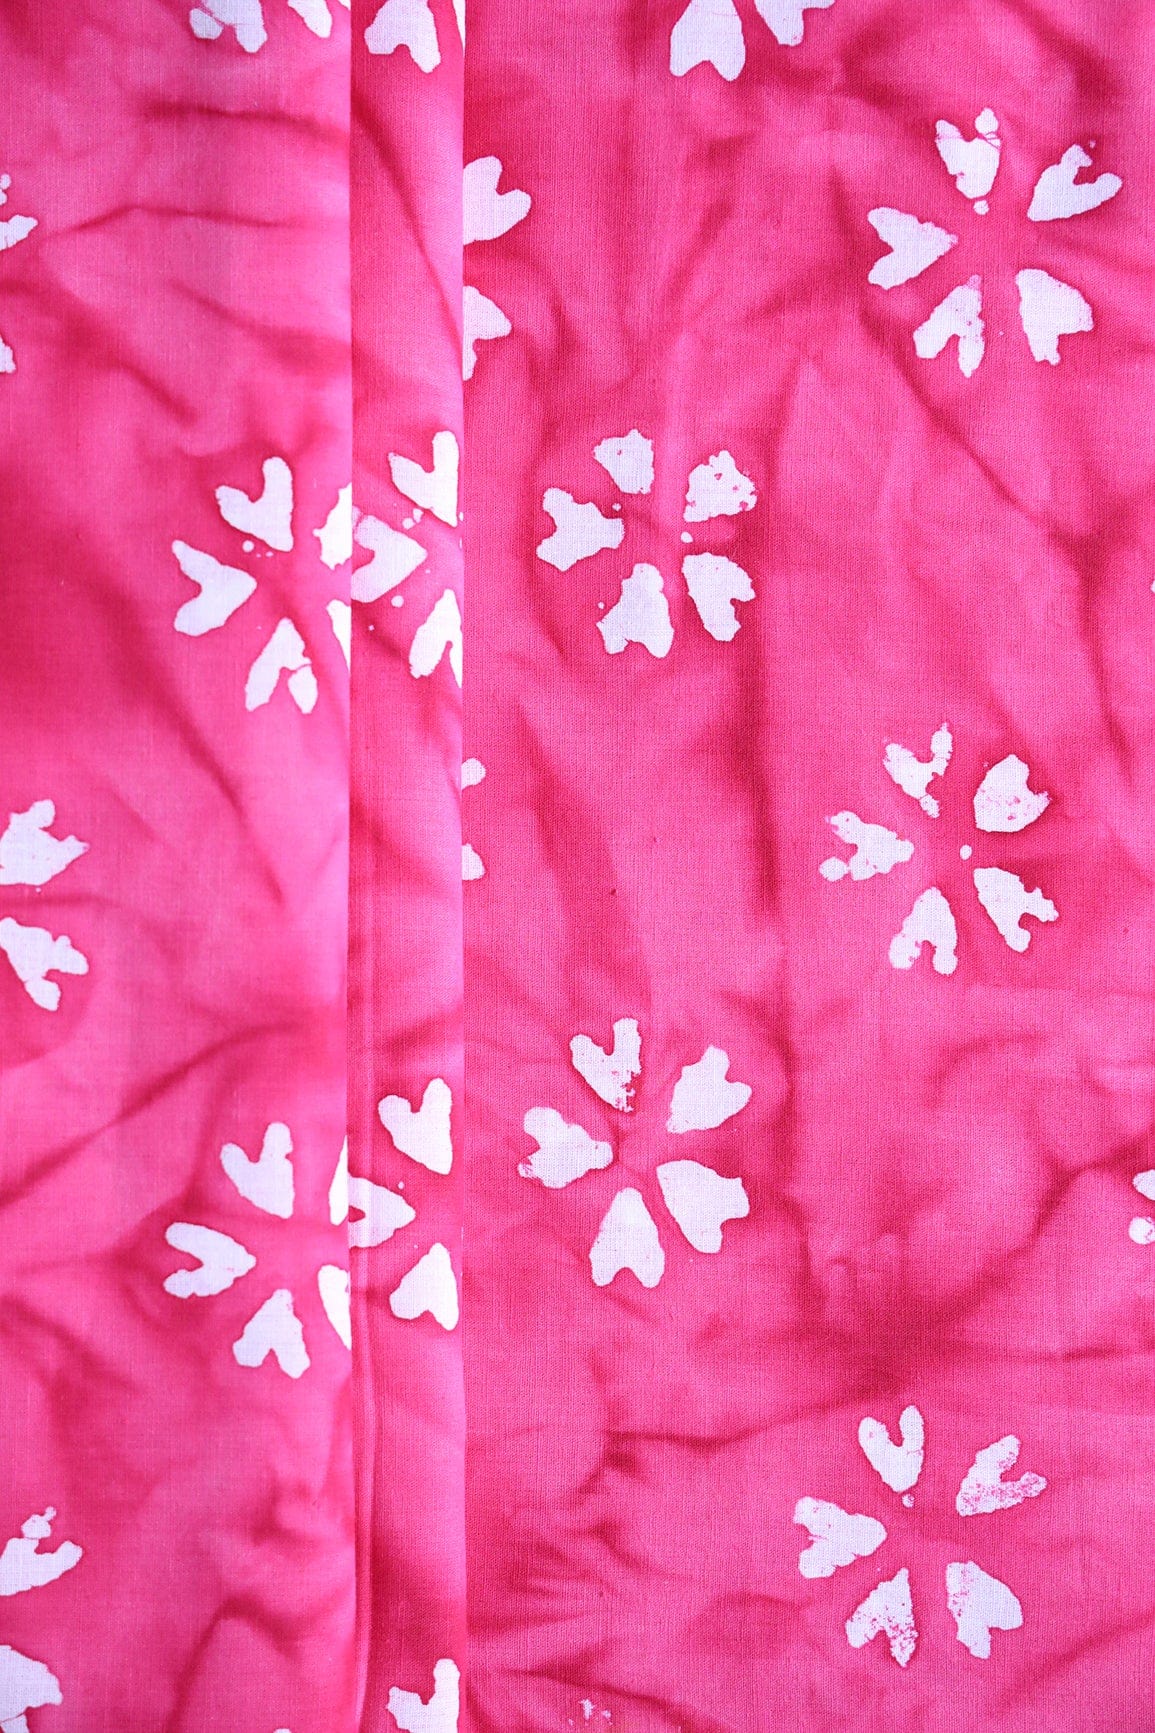 doeraa Prints White And Dark Pink Small Floral Pattern Batik Handblock Organic Cotton Fabric